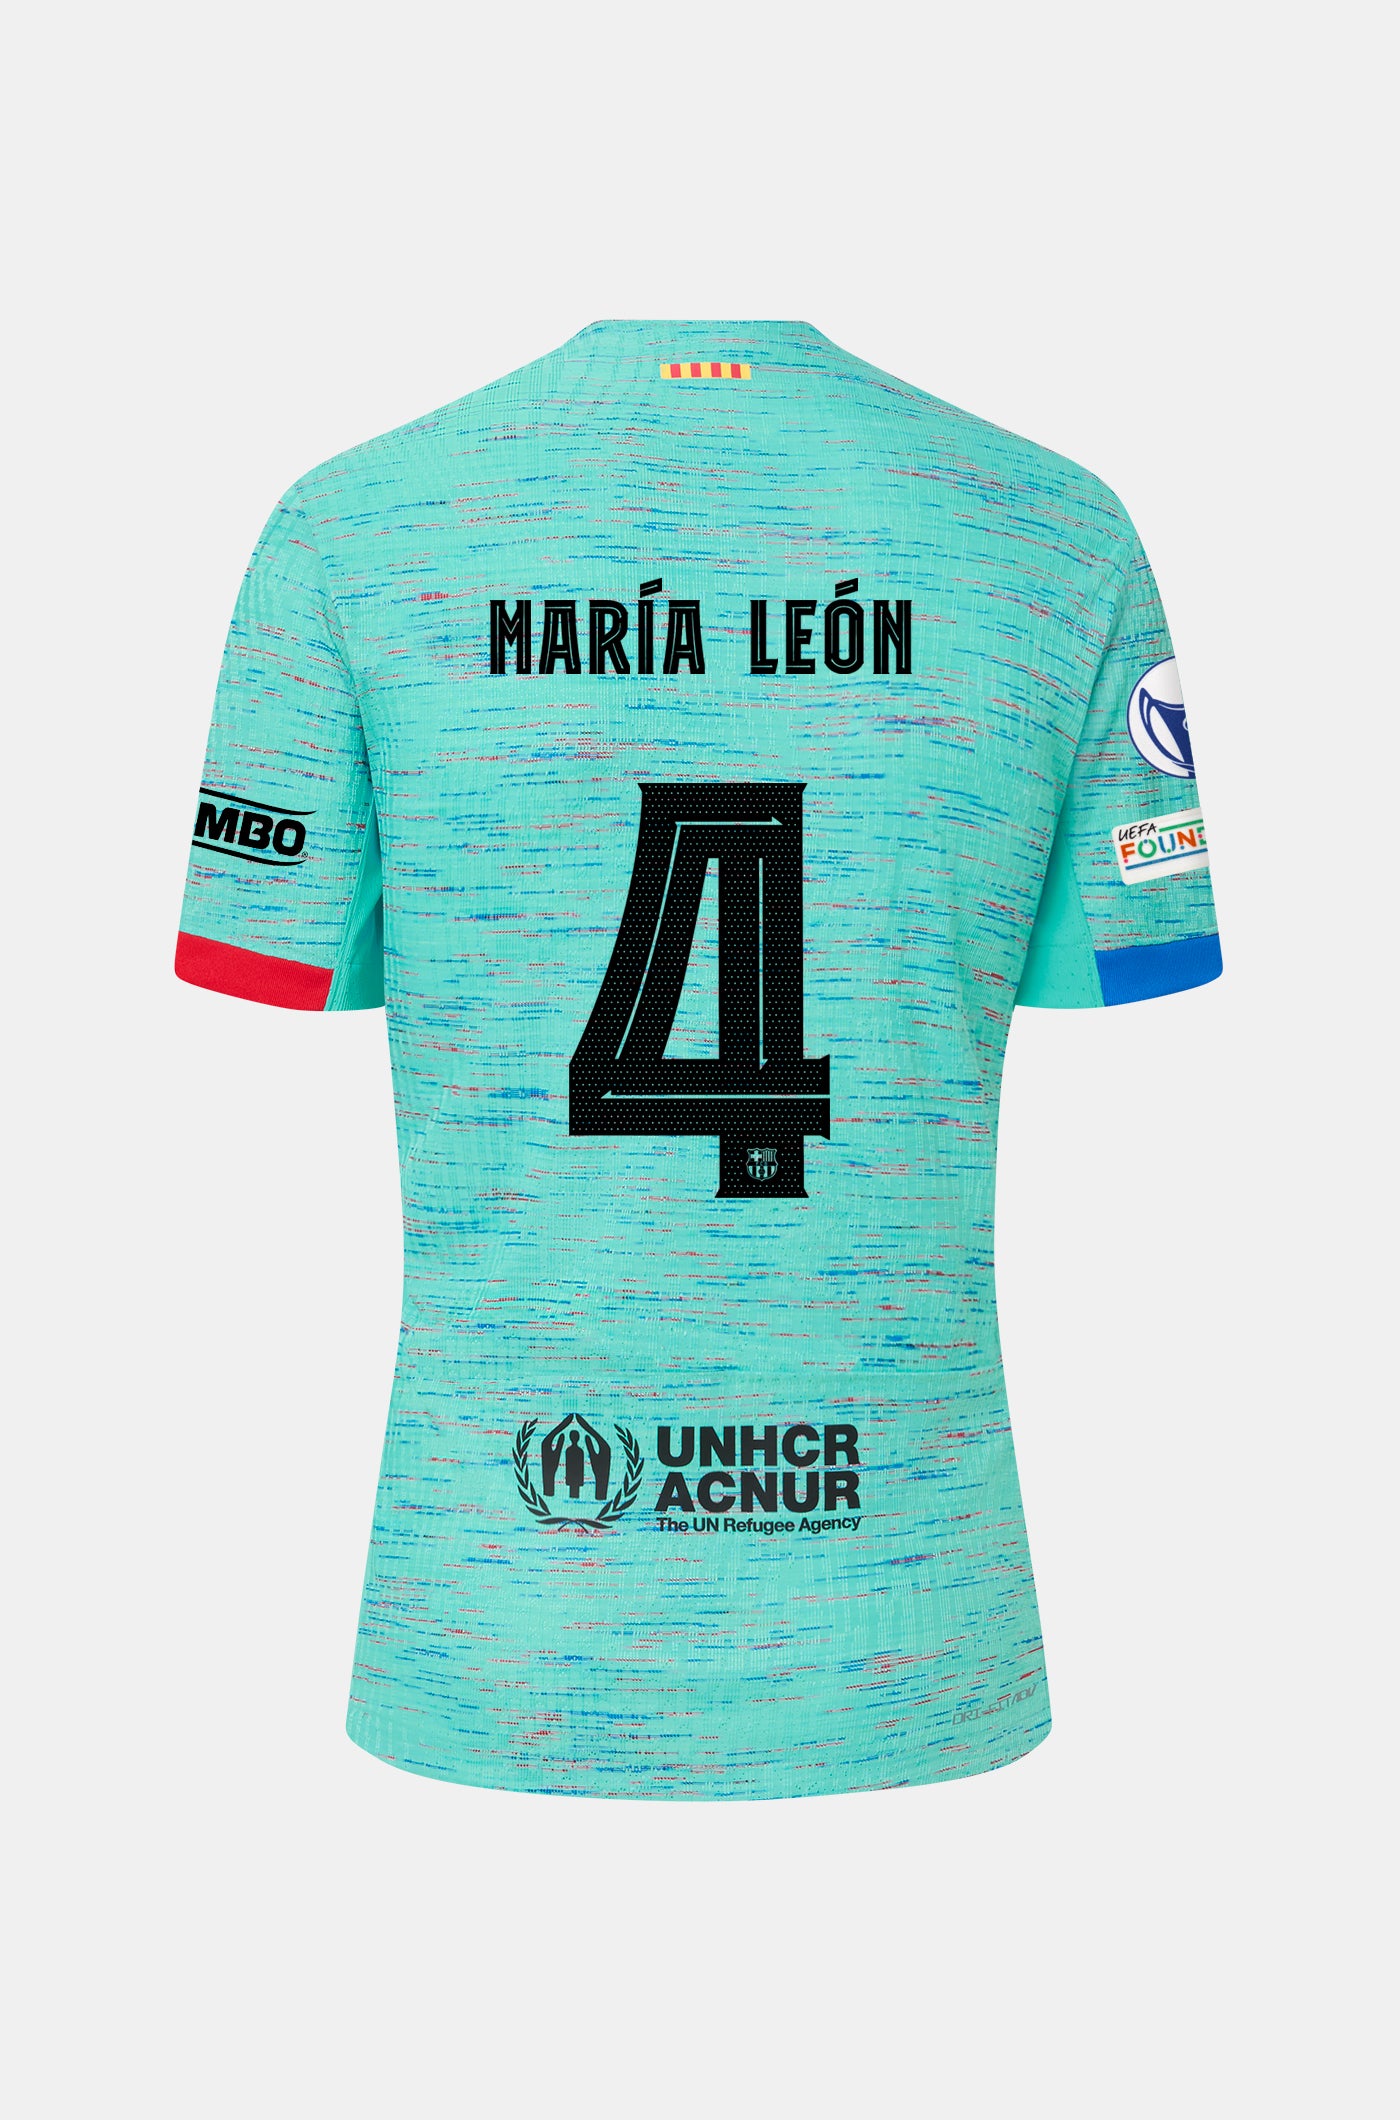 UWCL FC Barcelona third shirt 23/24 Player's Edition - MARÍA LEÓN